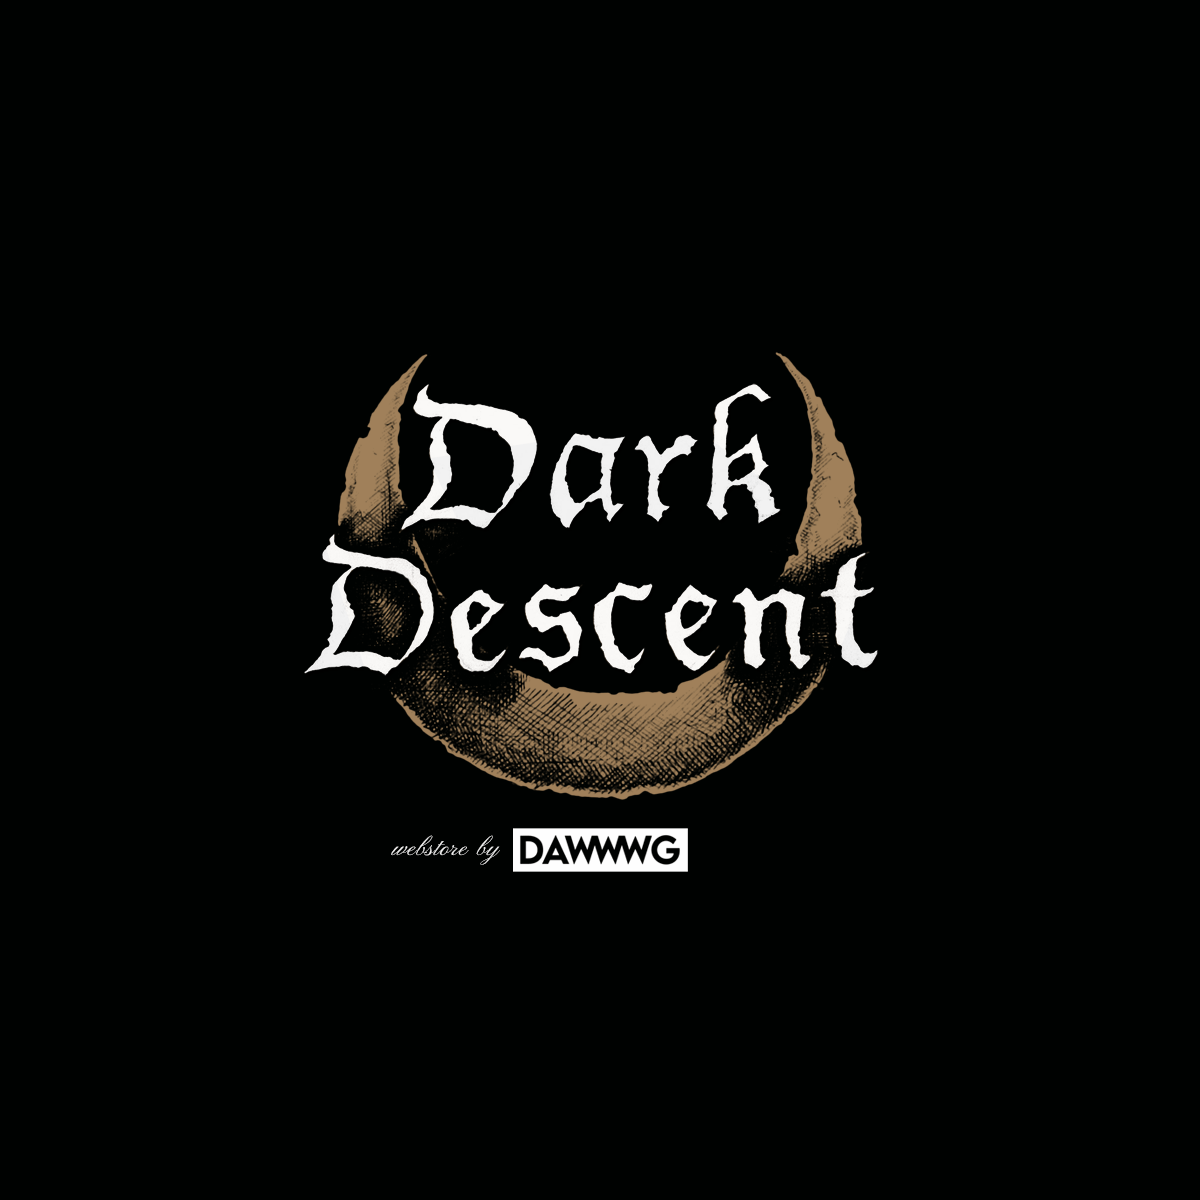 www.darkdescentrecords.com